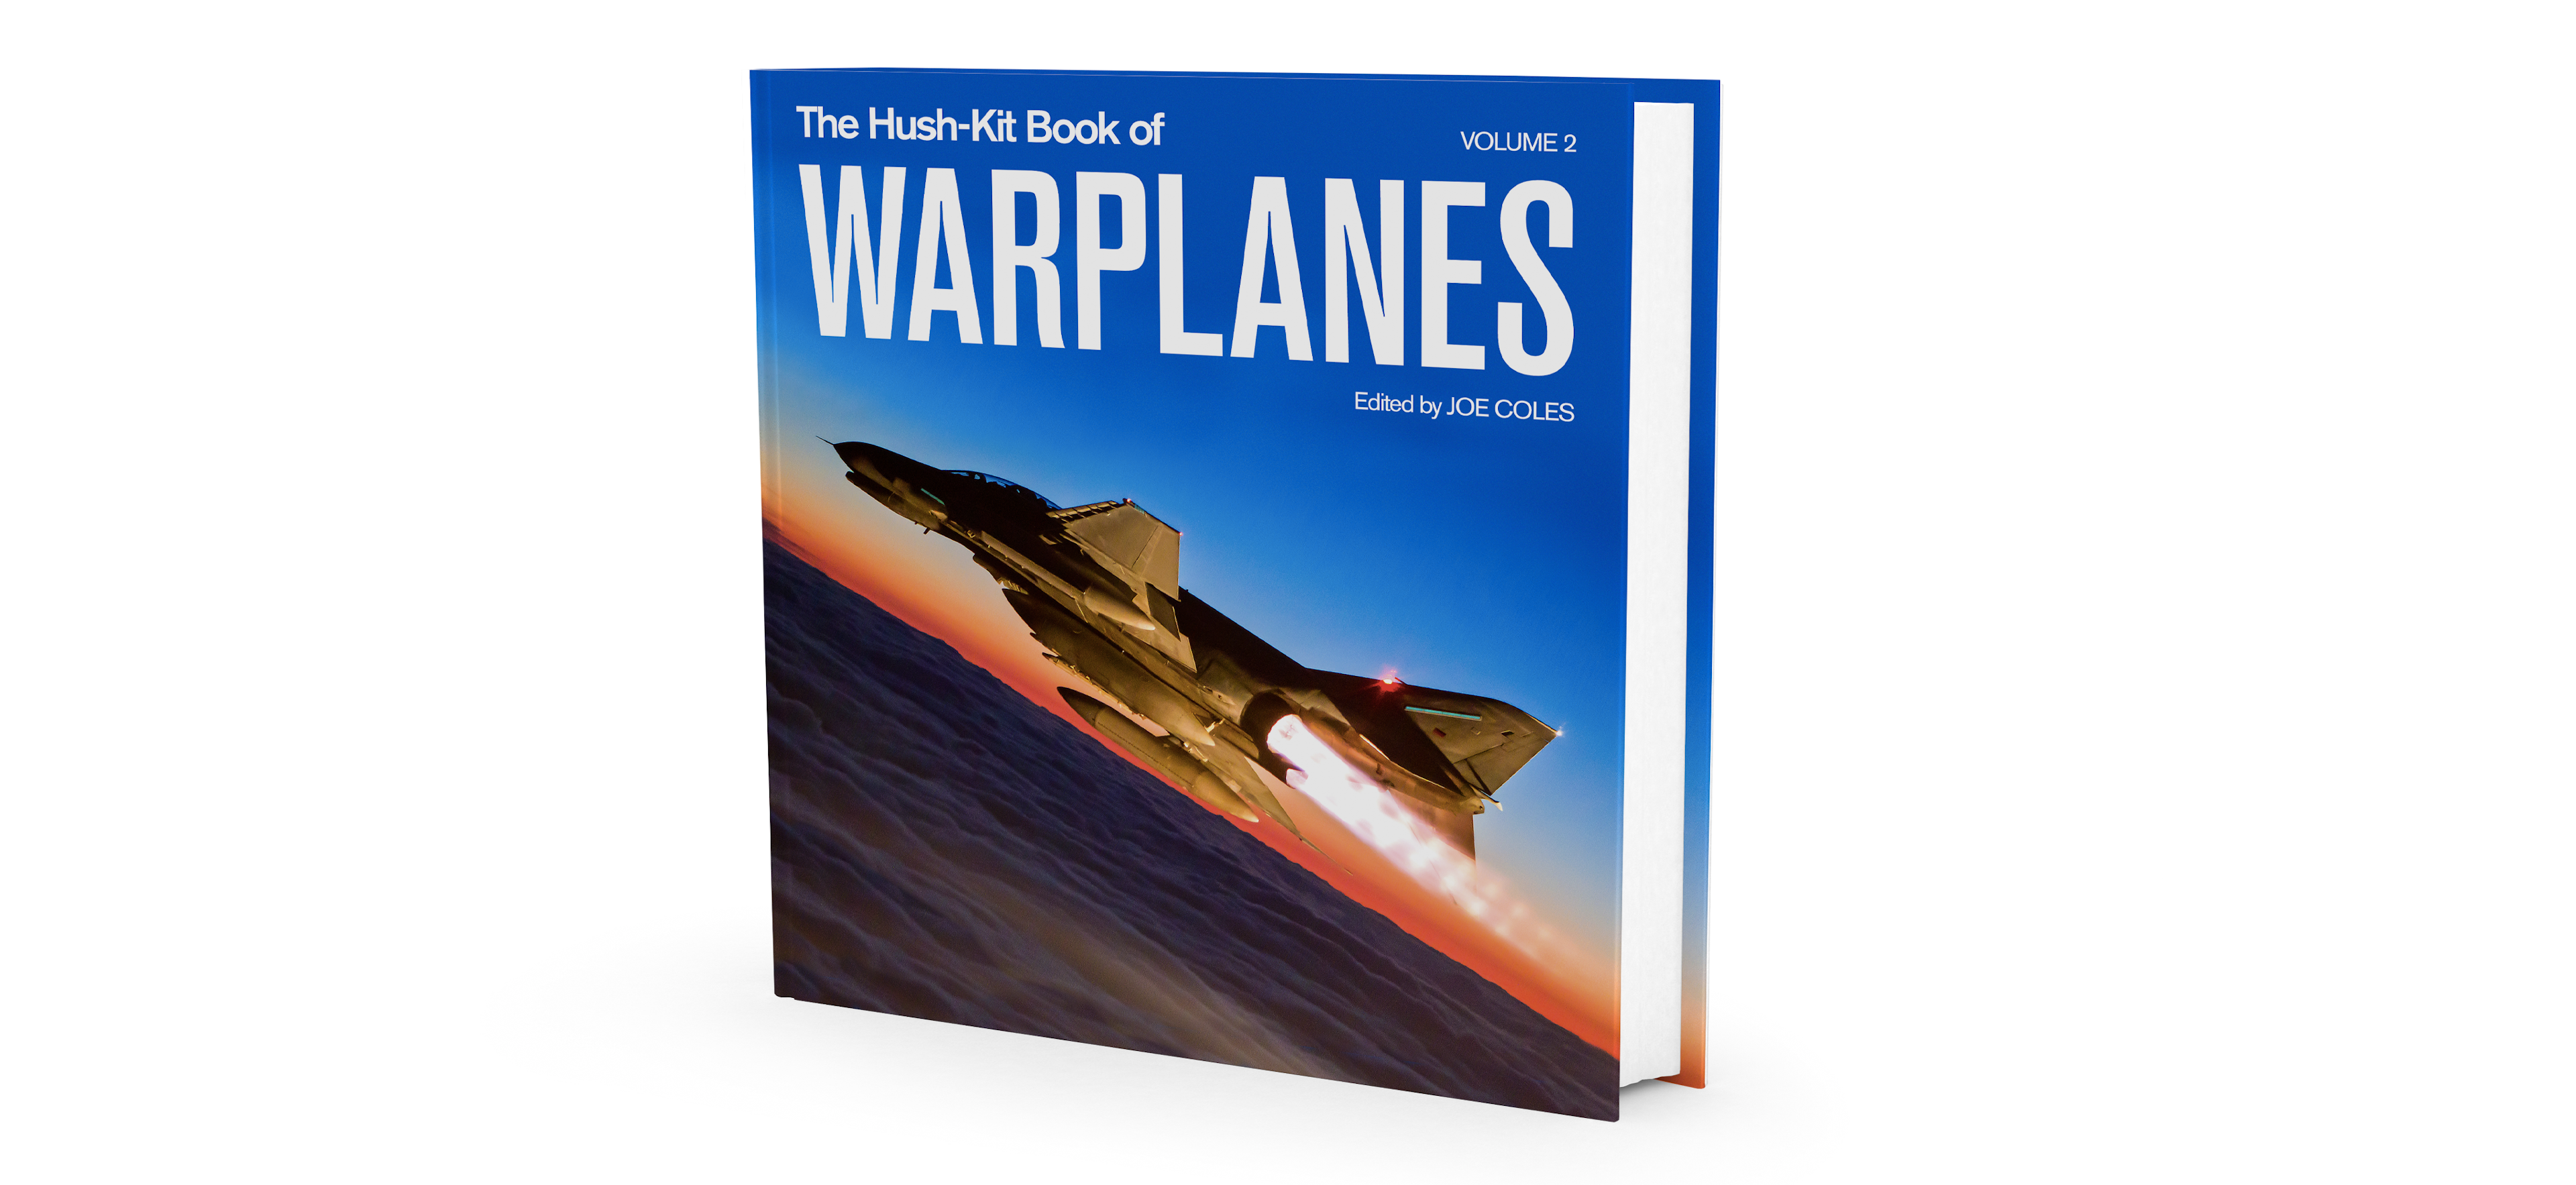 The Hush-Kit Book of Warplanes Volume 2